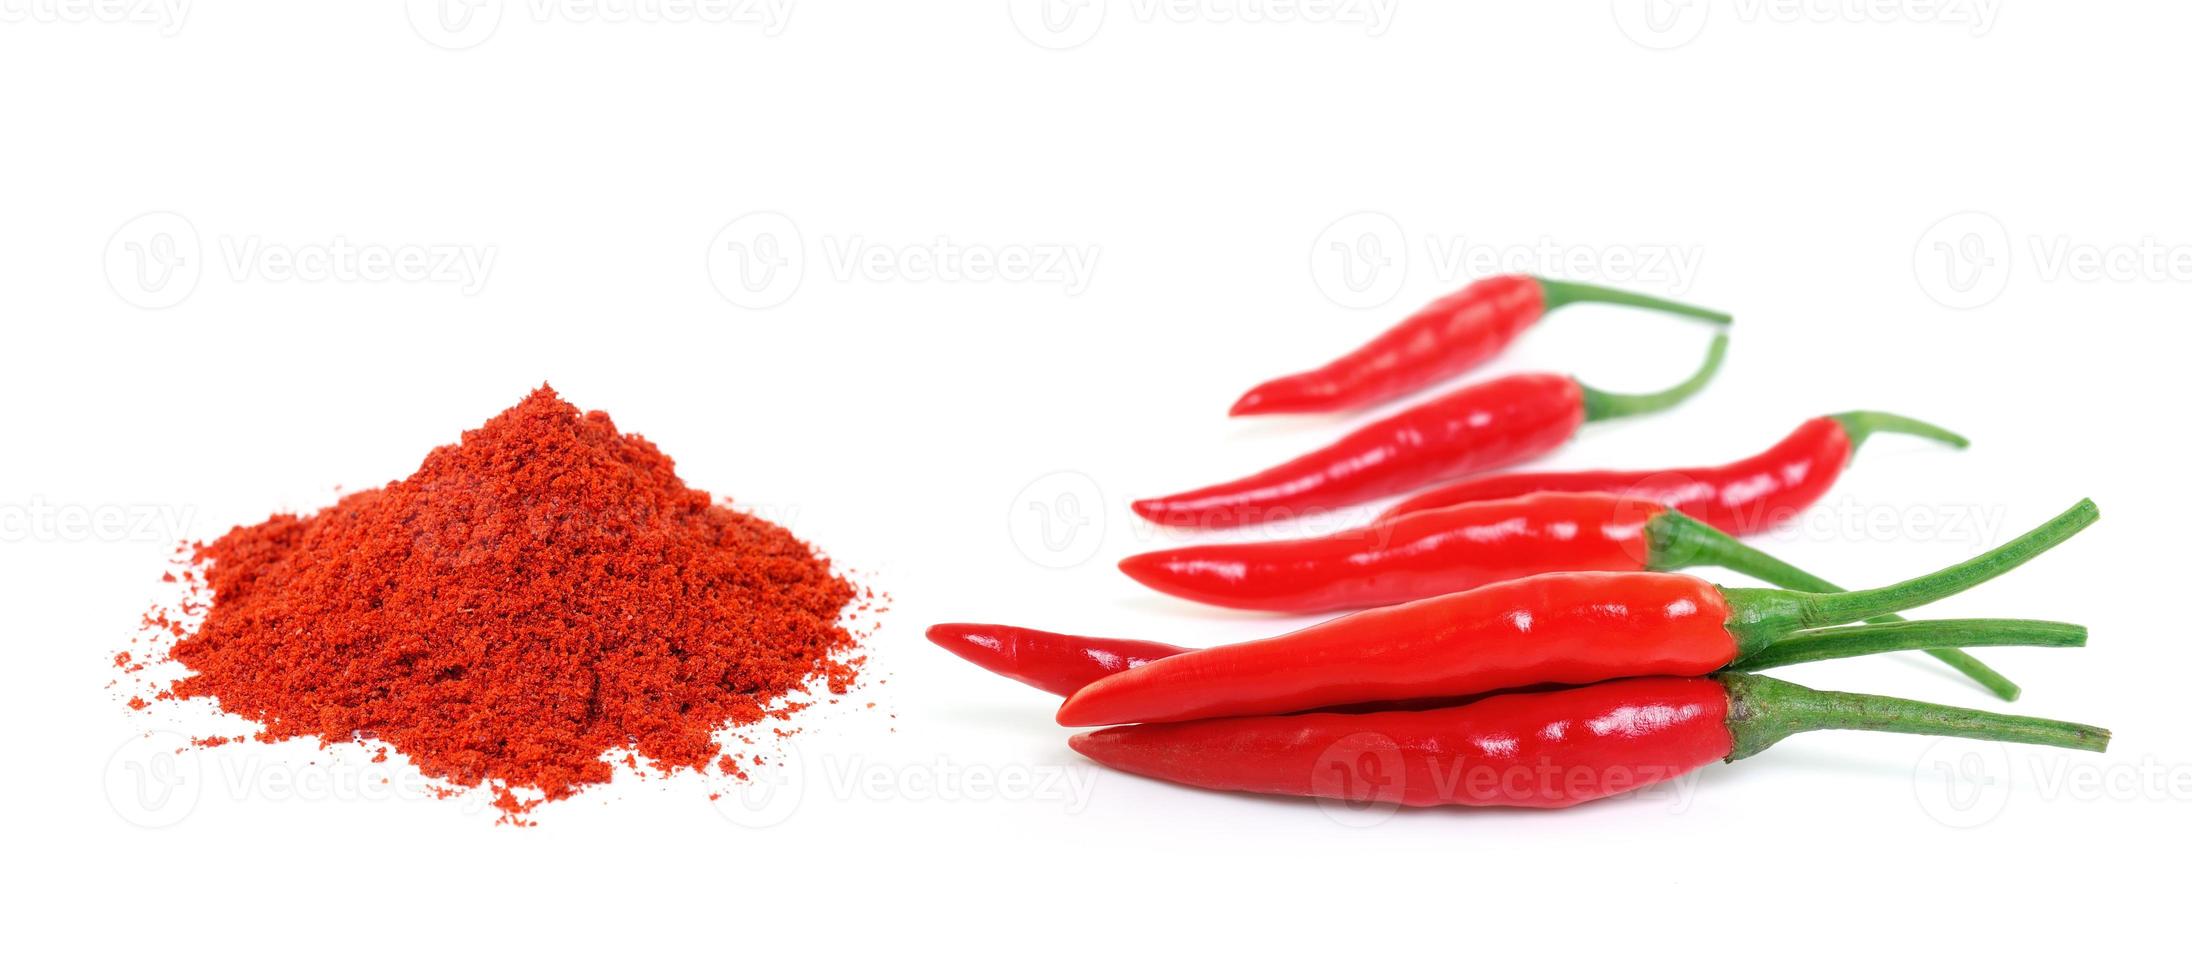 peperoncino rosso e peperoncino di cayenna isolato su uno sfondo bianco foto